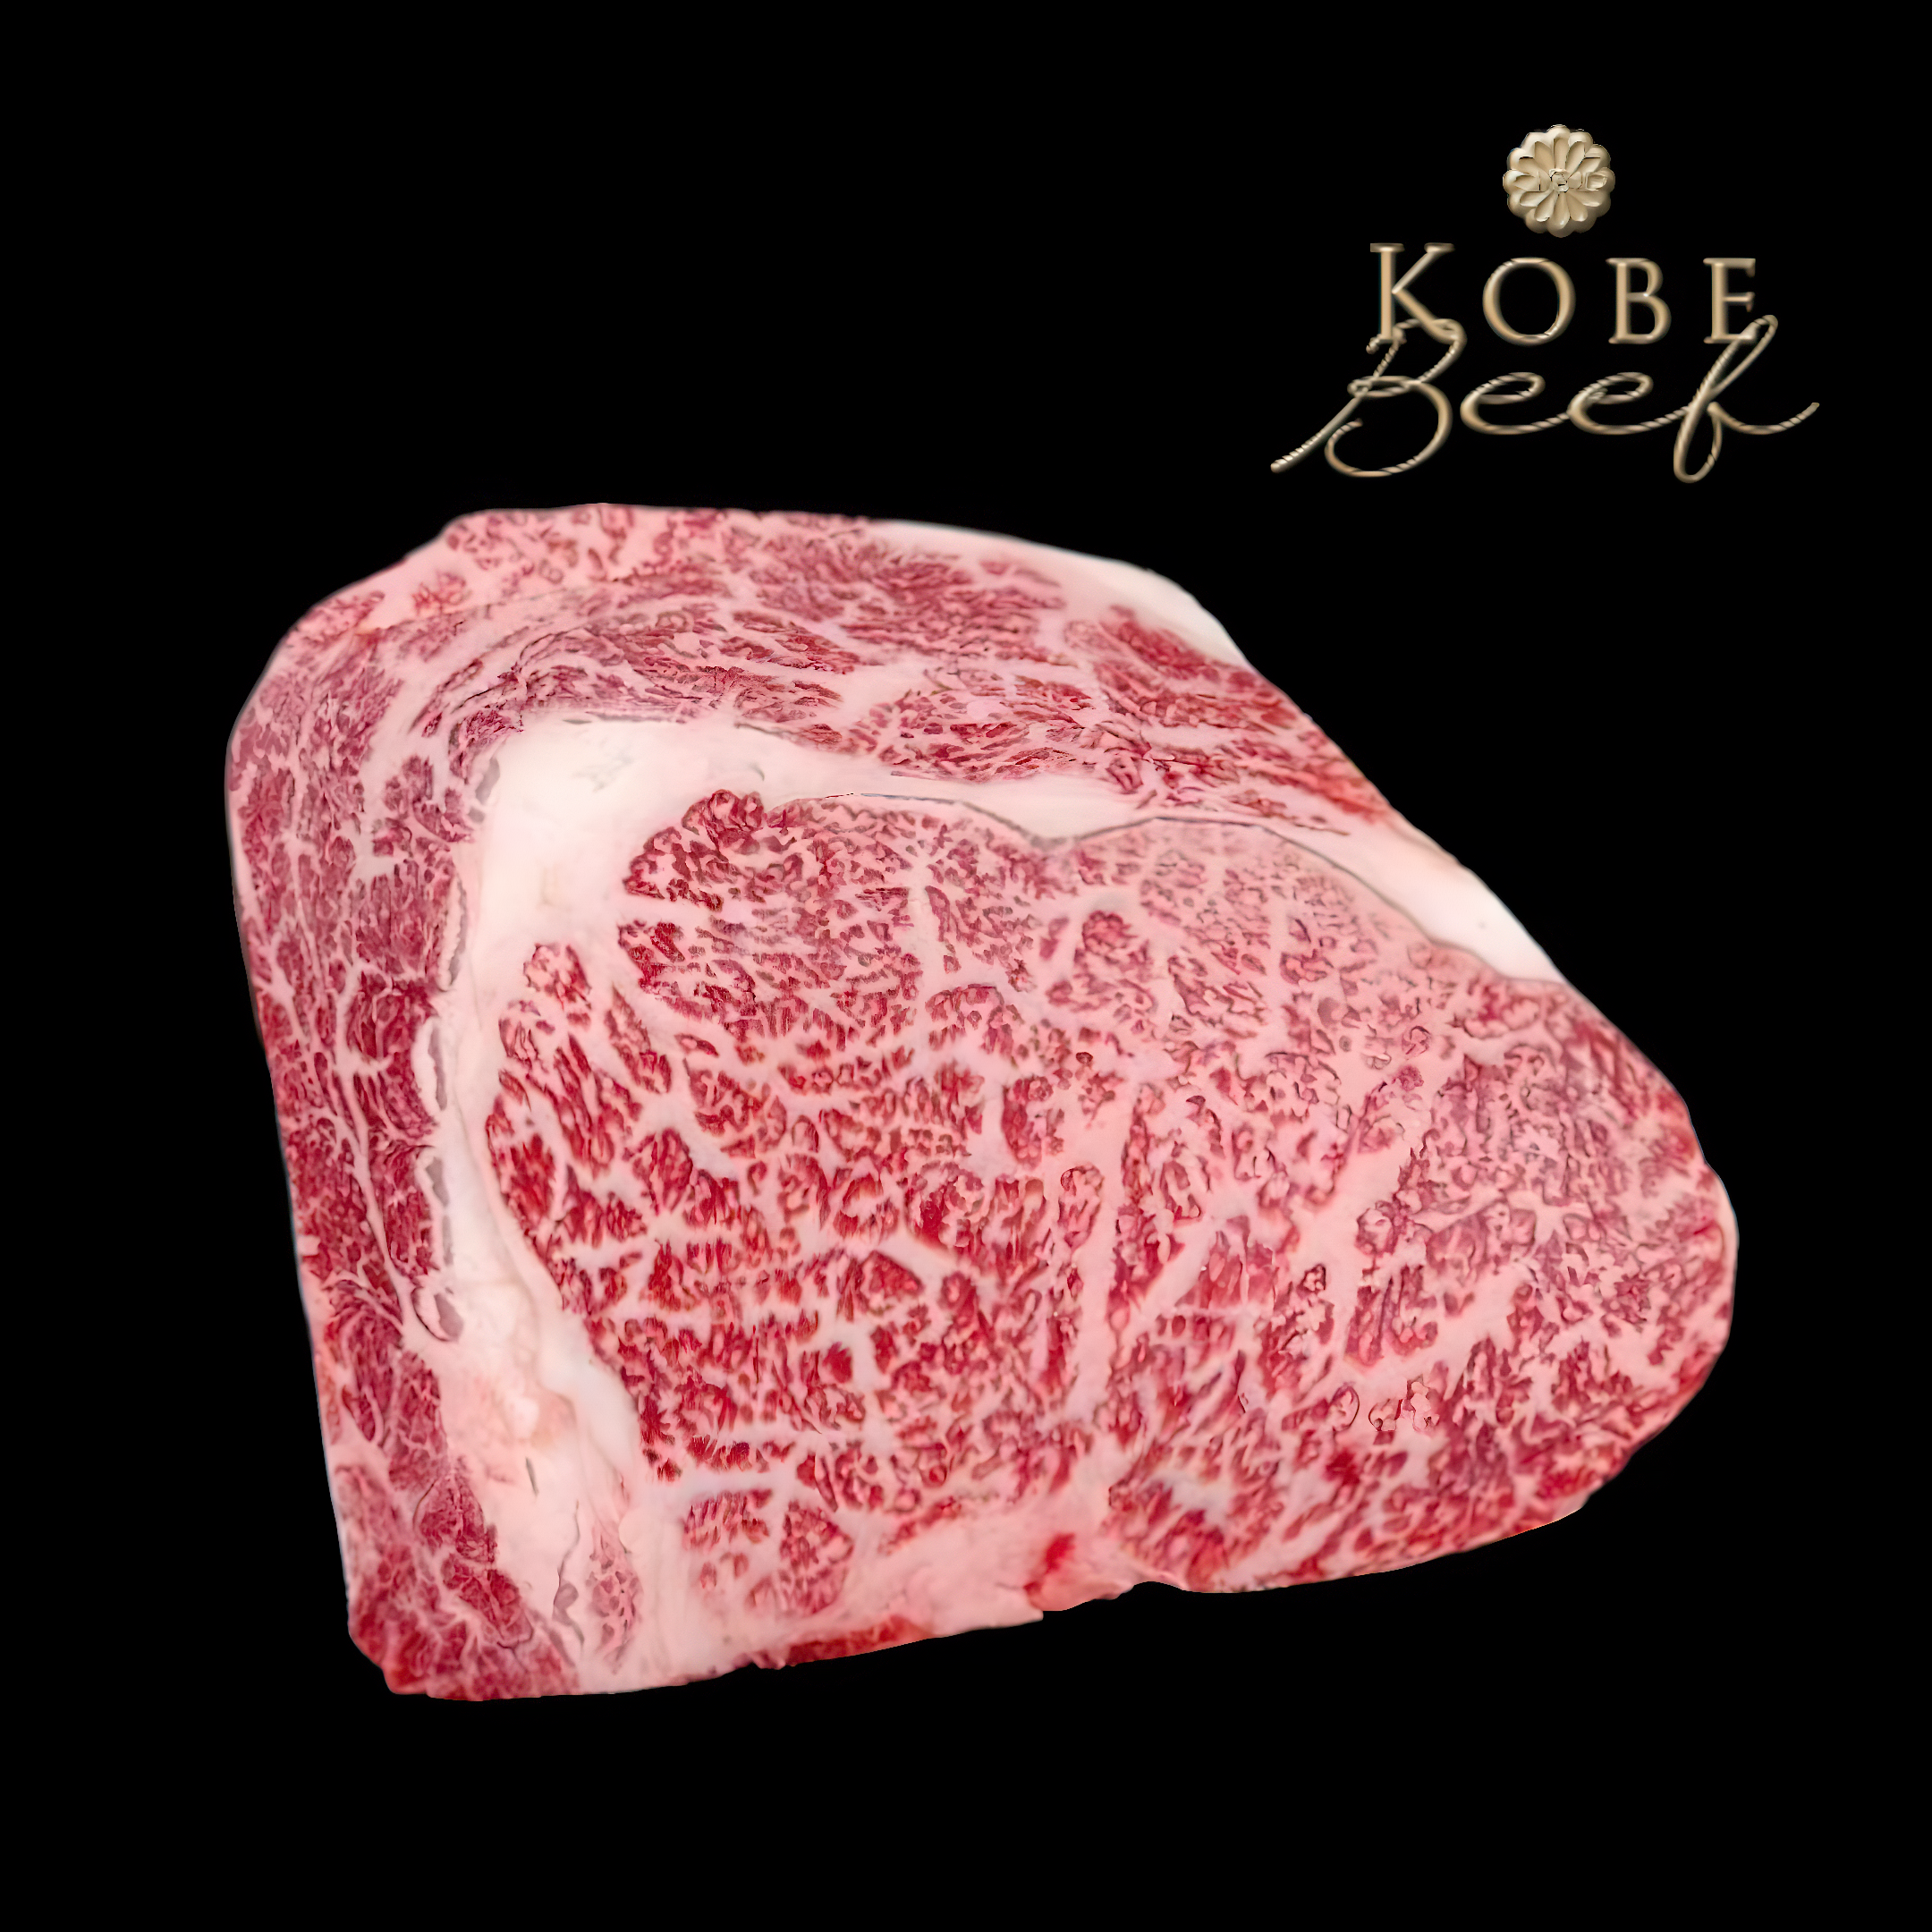 Boeuf de Kobe: Est-ce la meilleure viande du monde ?